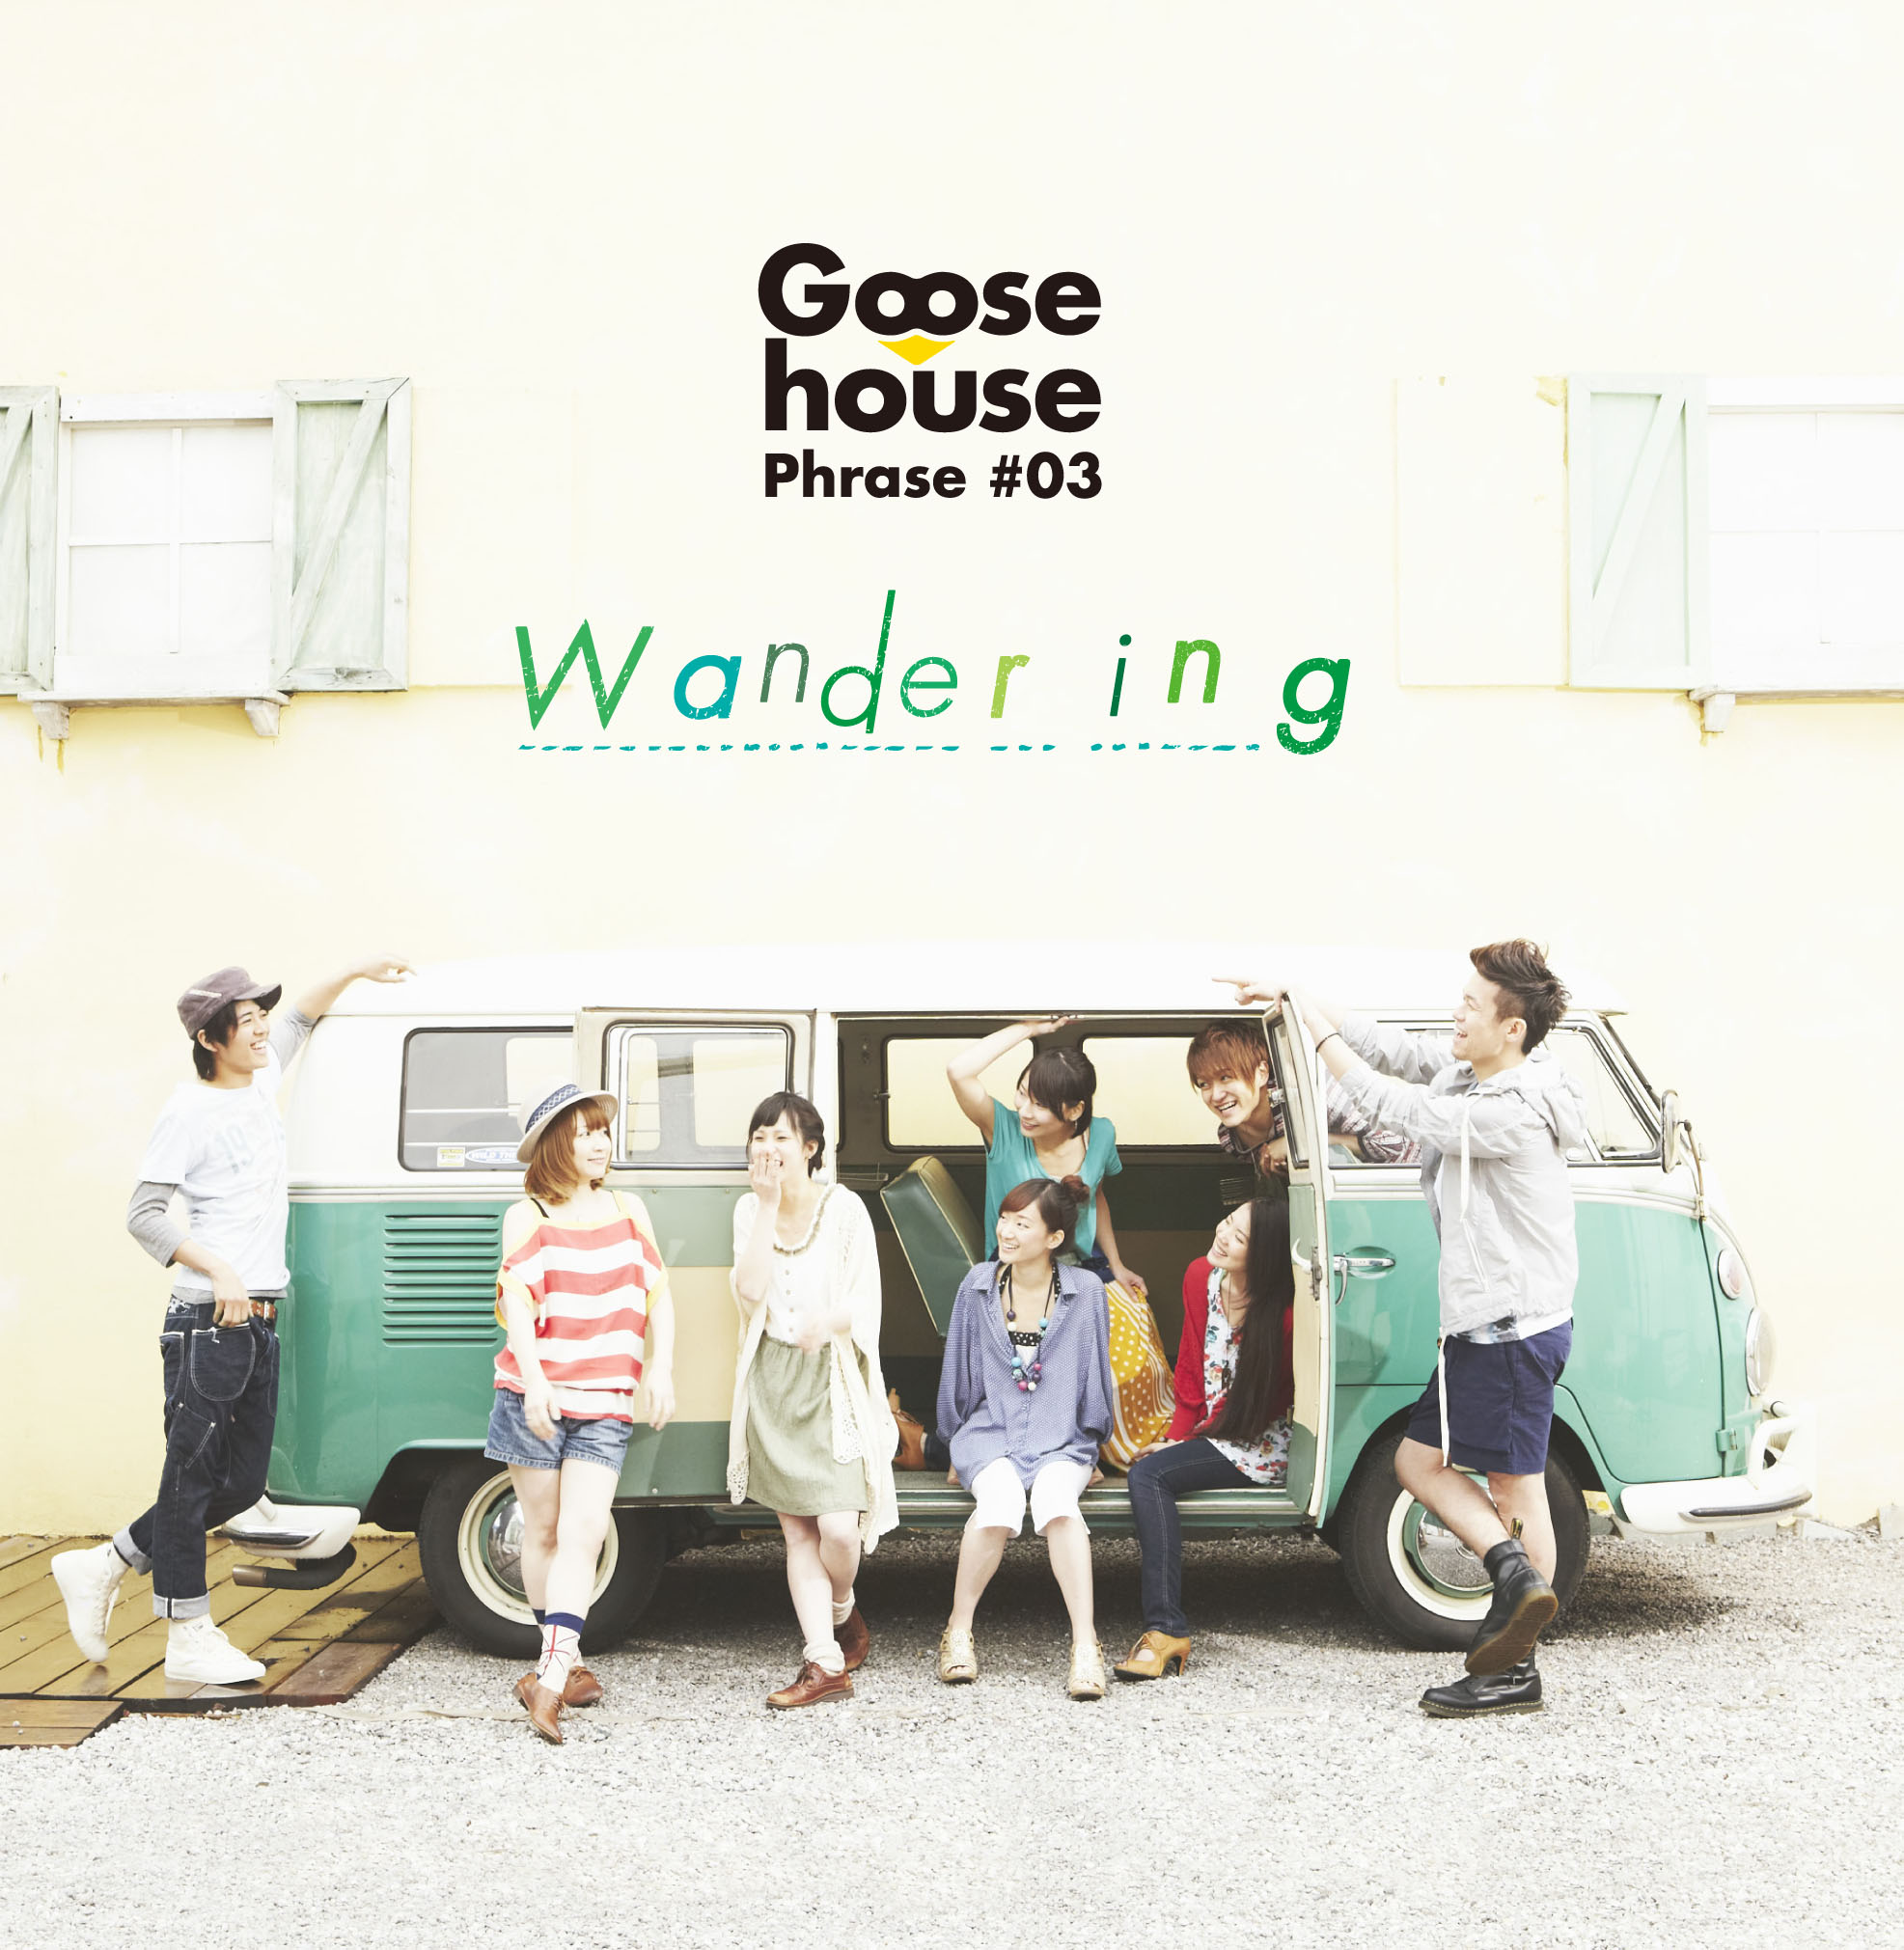 Goose House 初のフルアルバム 5月23日 水 発売 Goose House Phrase 03 Wandering 5月2日 水 より新星堂ショッピングサイトにて先行予約スタート Goosehousepr事務局のプレスリリース